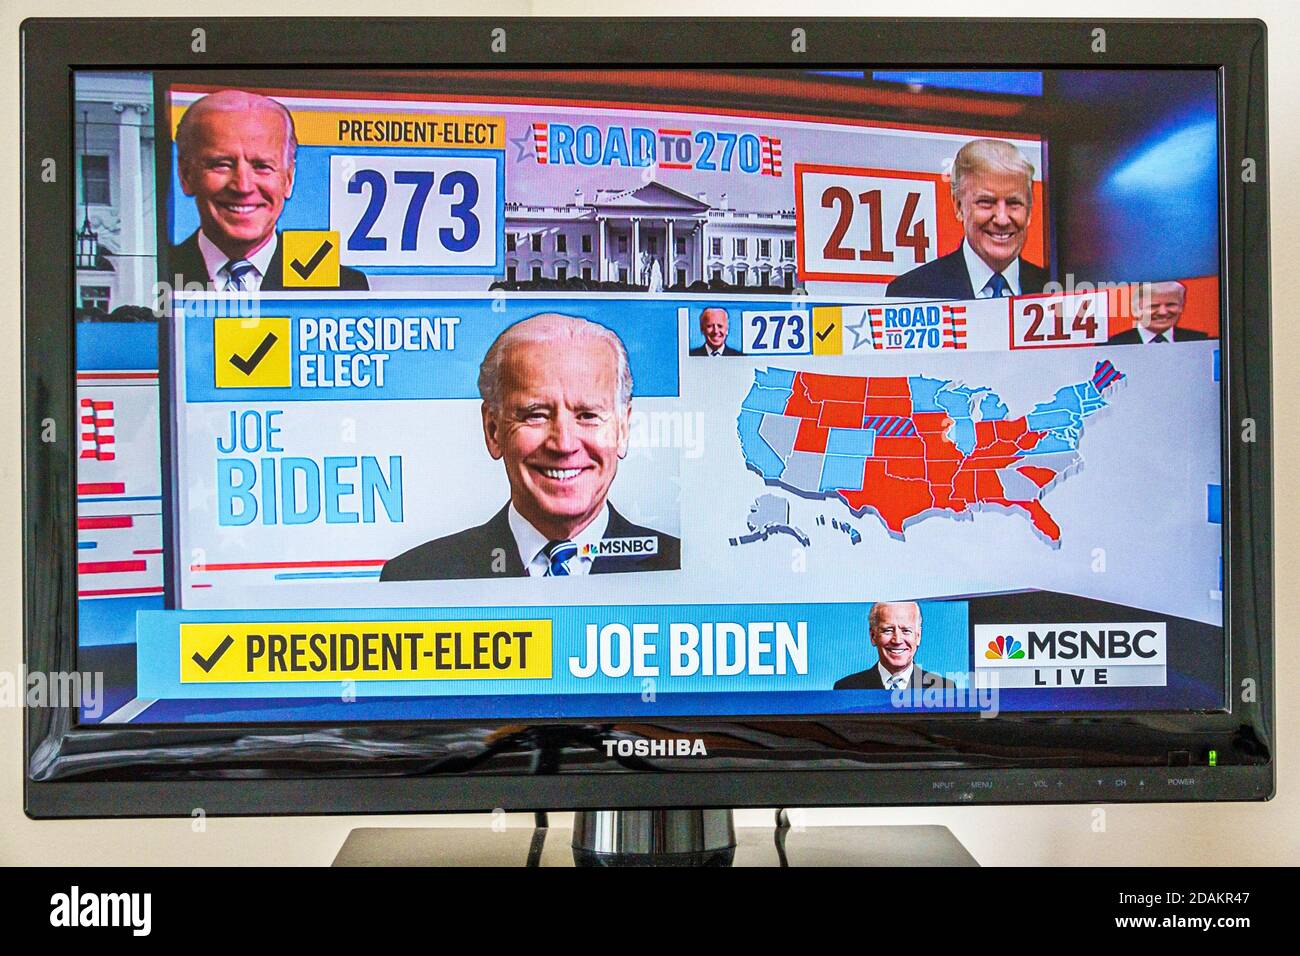 TV cable television screen monitor 2020 US presidential election results,Joe Biden Donald Trump votes electoral college popular vote count,MSNBC proje Stock Photo